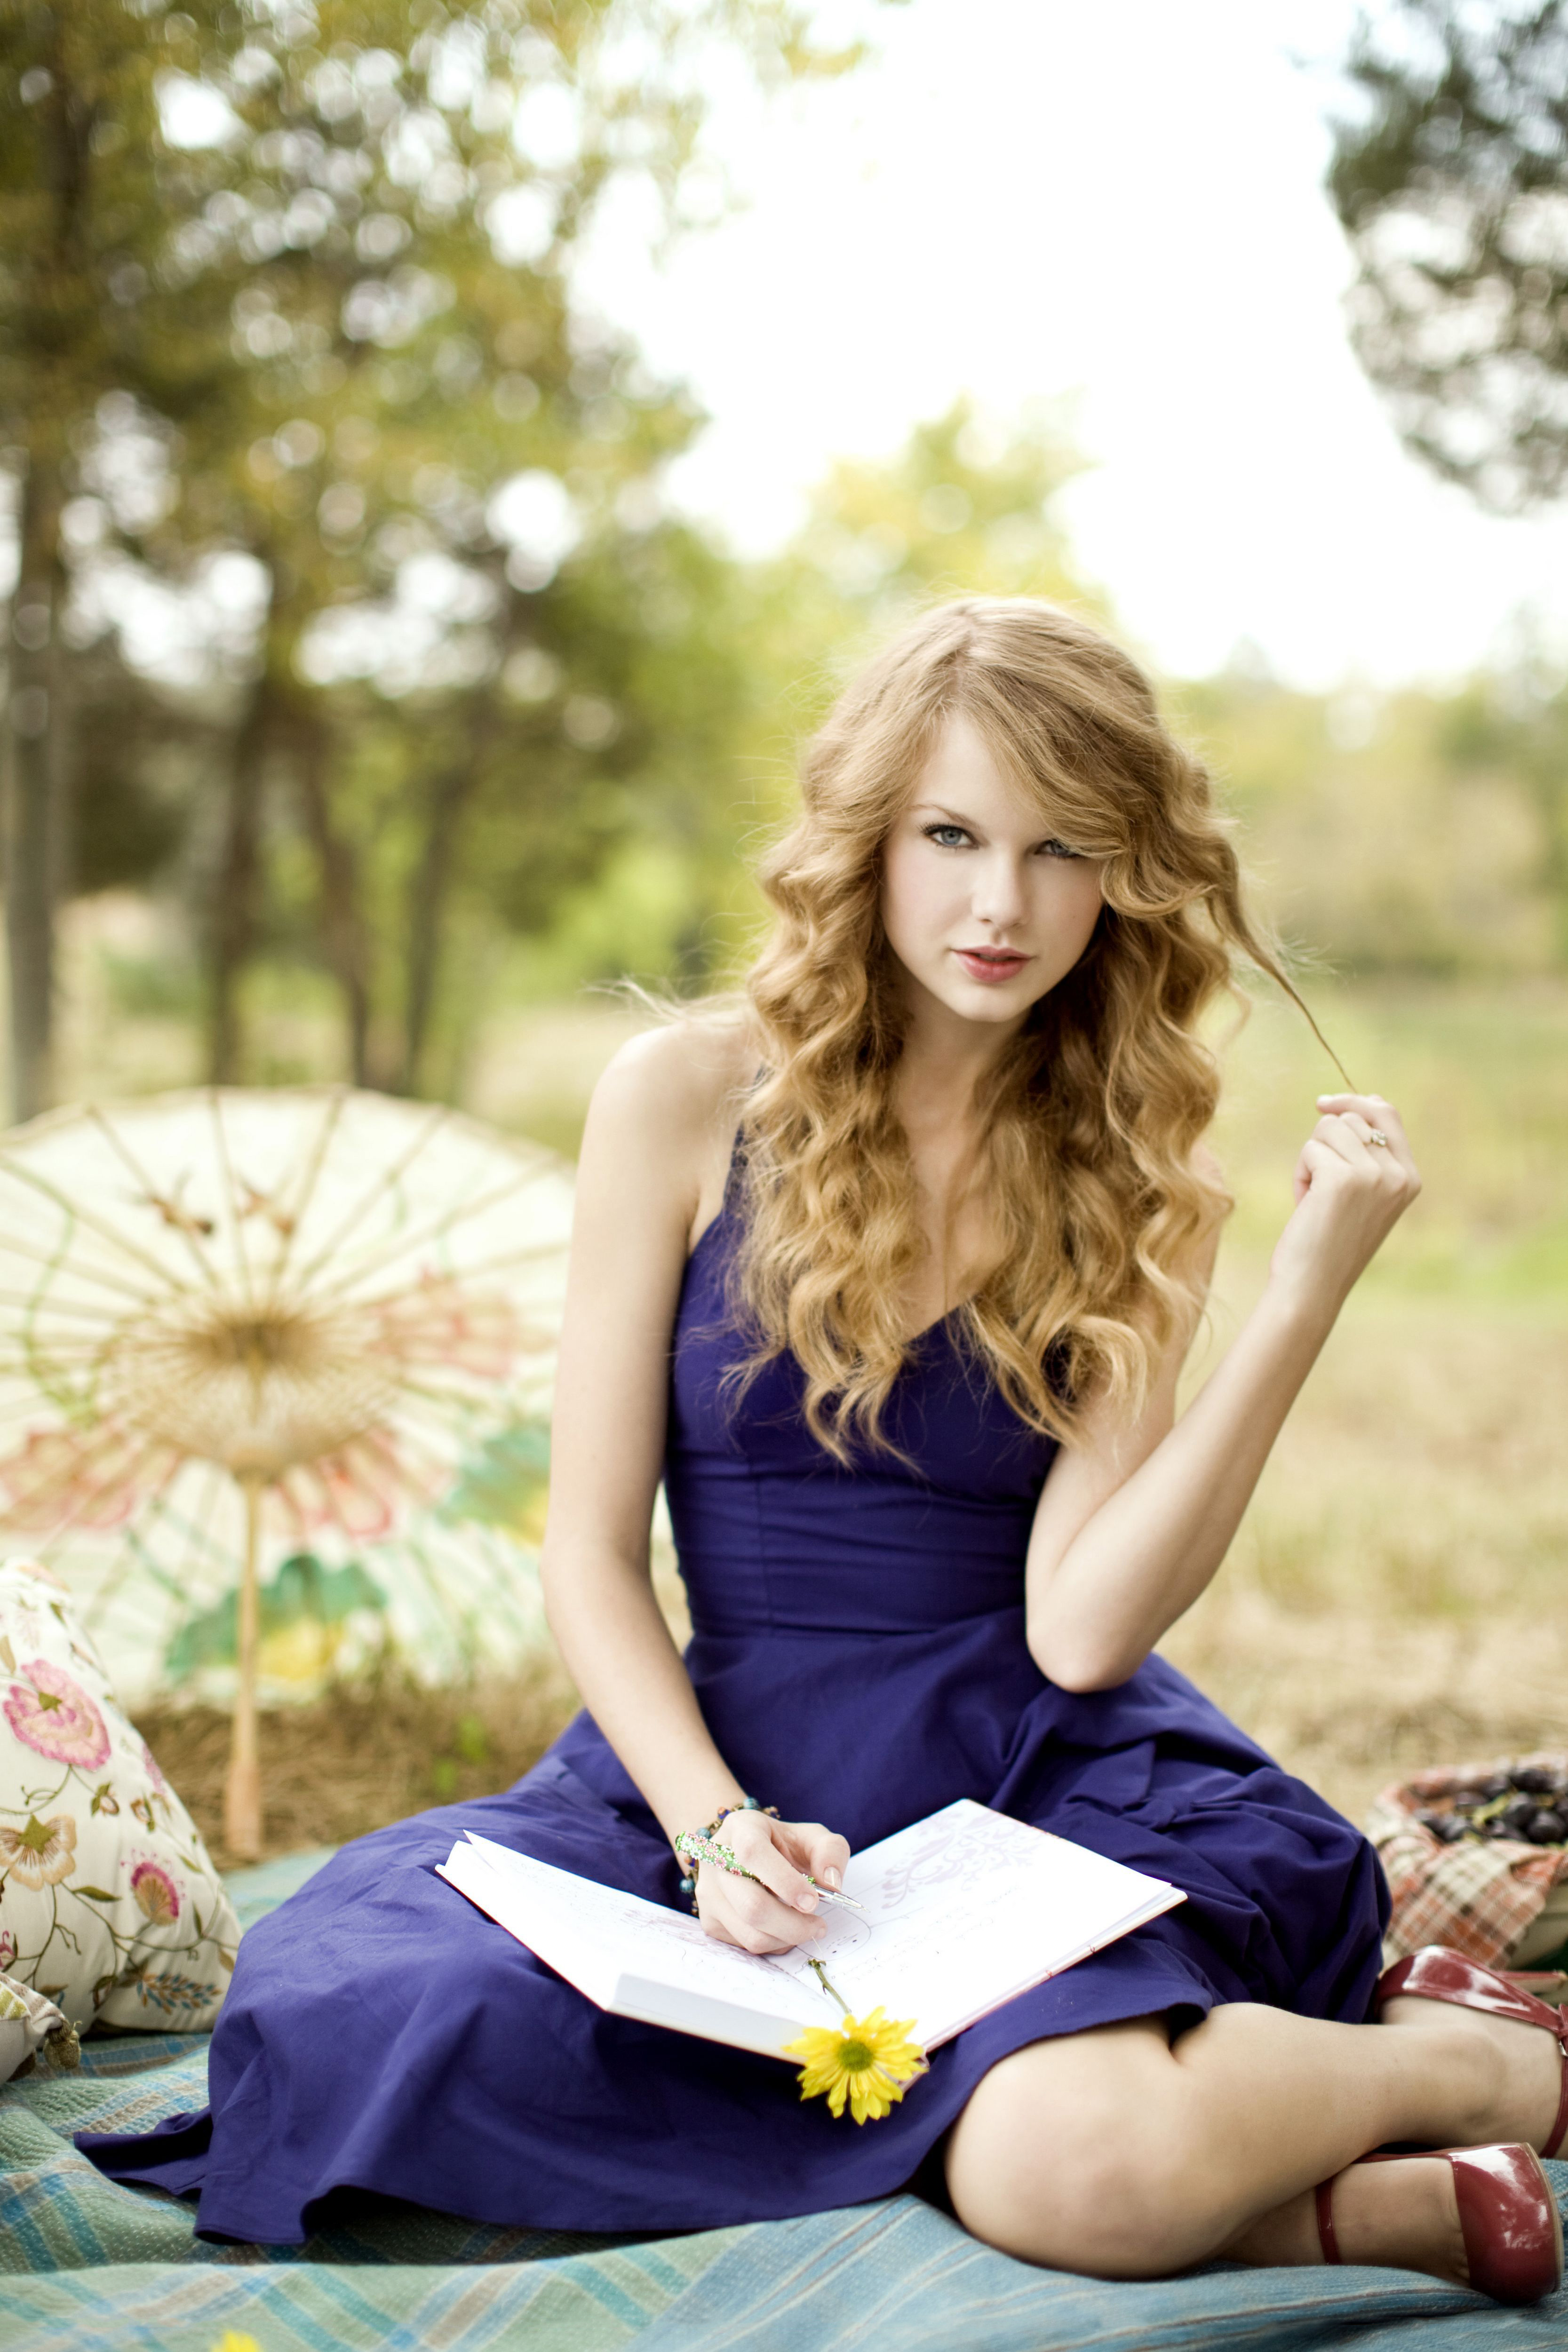 People 3333x5000 Taylor Swift women singer blue eyes blonde long hair wavy hair outdoors grass trees women outdoors dress violet dress heels pulling hair